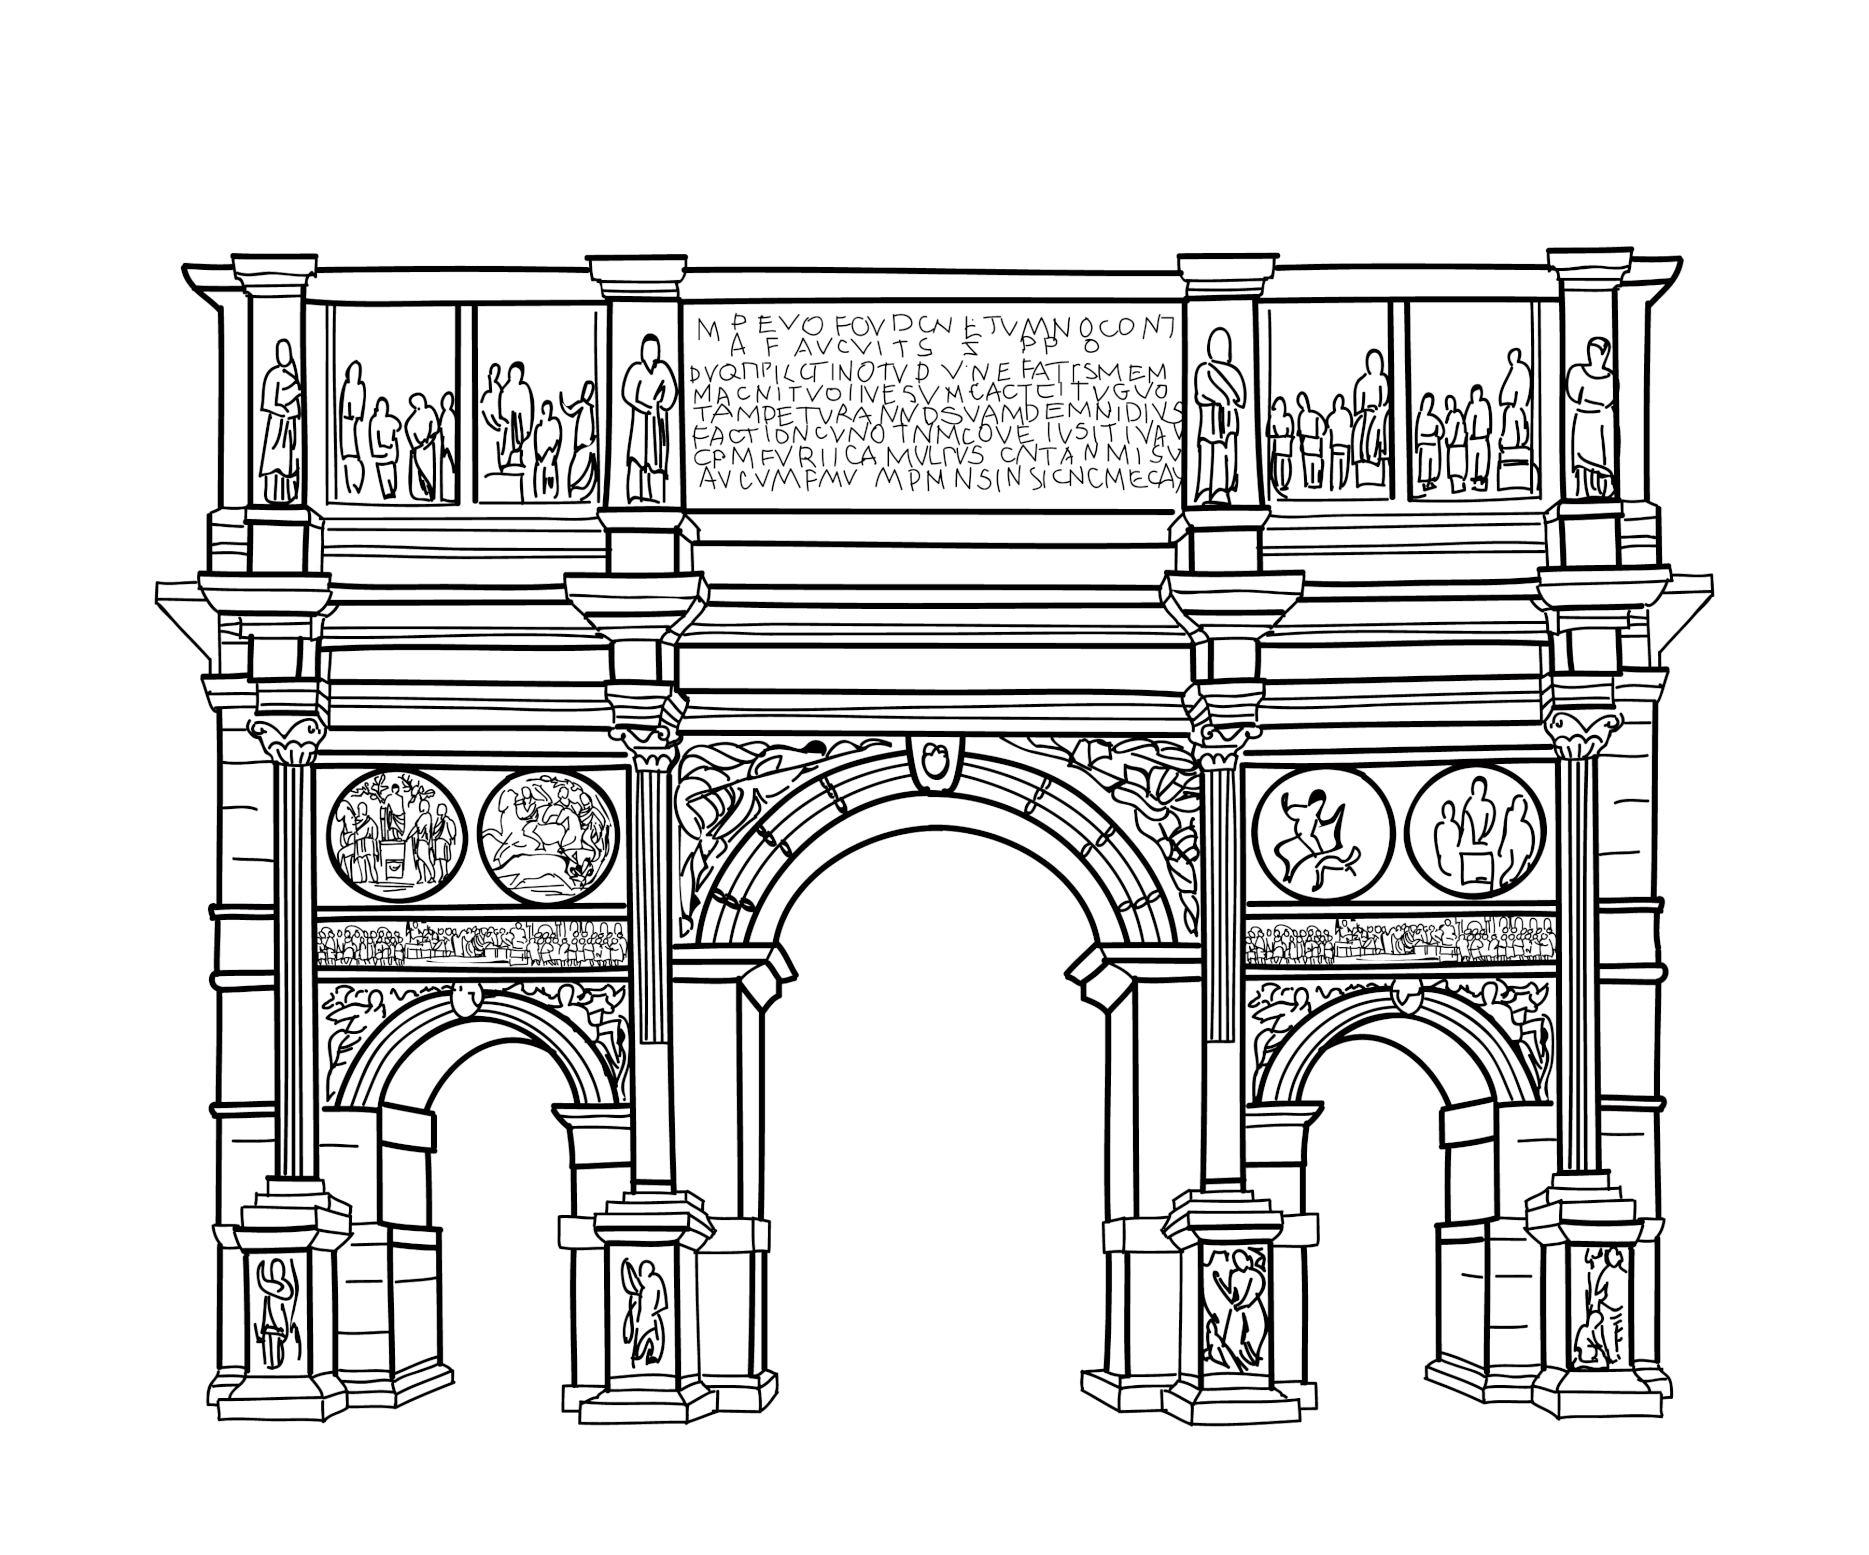 Constantin's arch